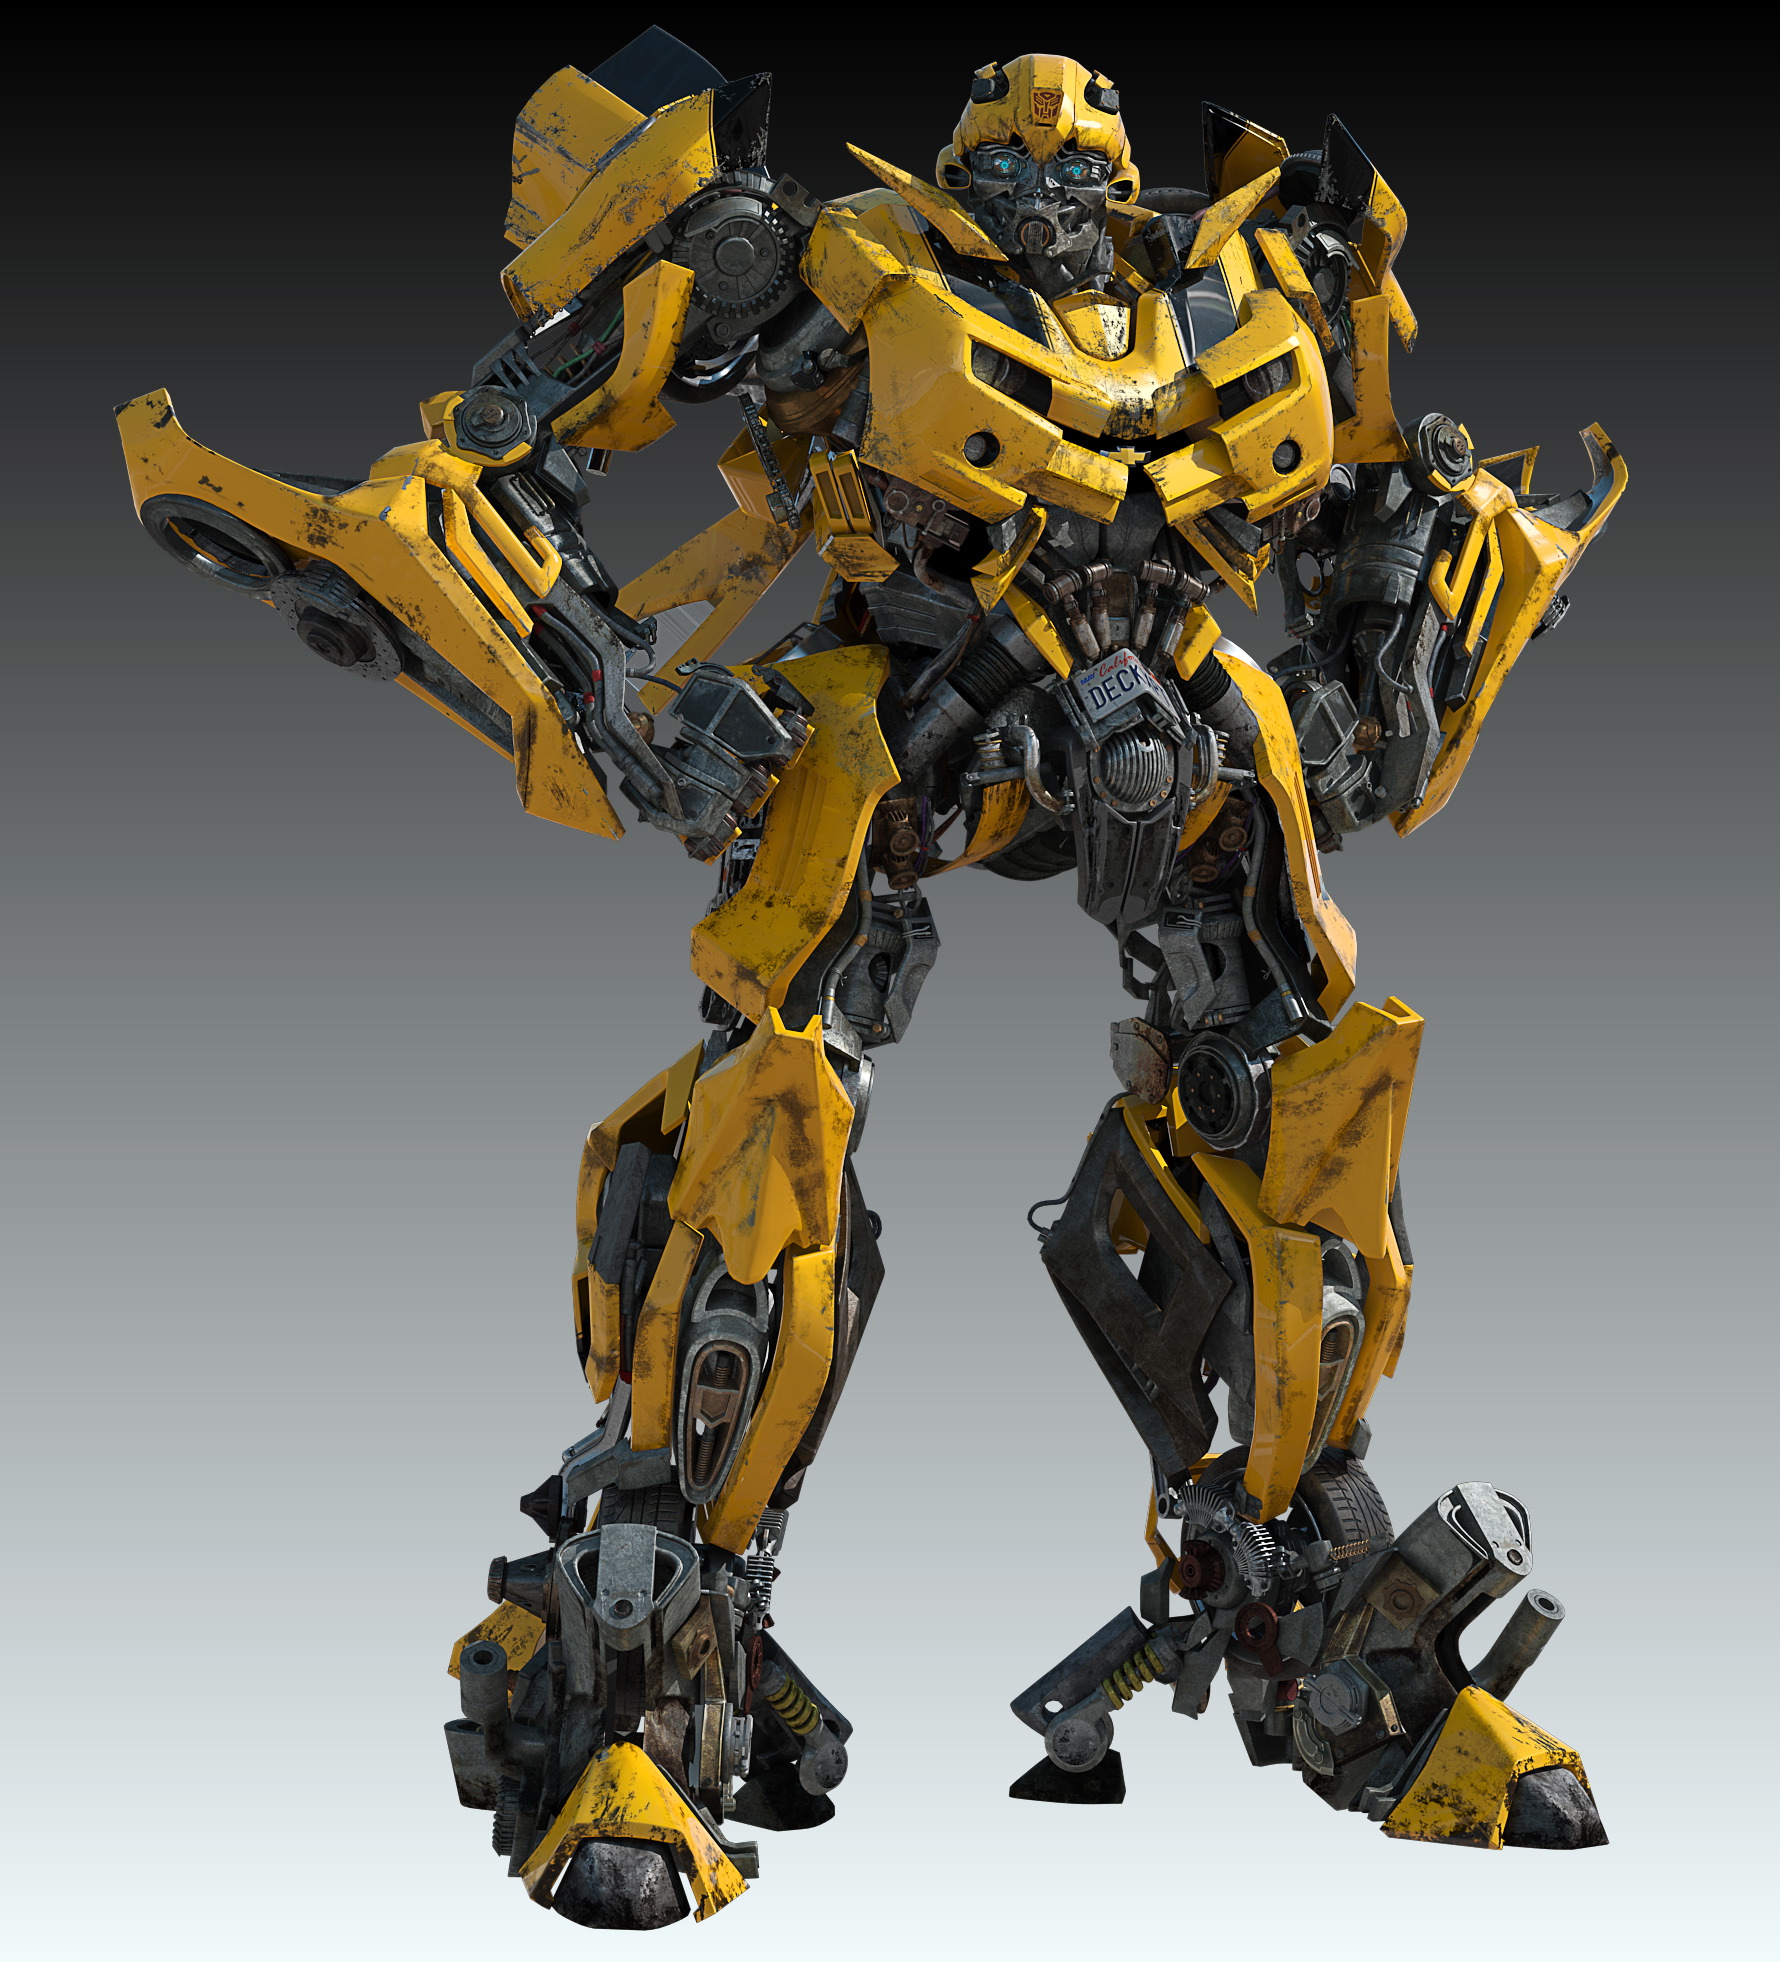 chverlote bumblebee autobot transformers